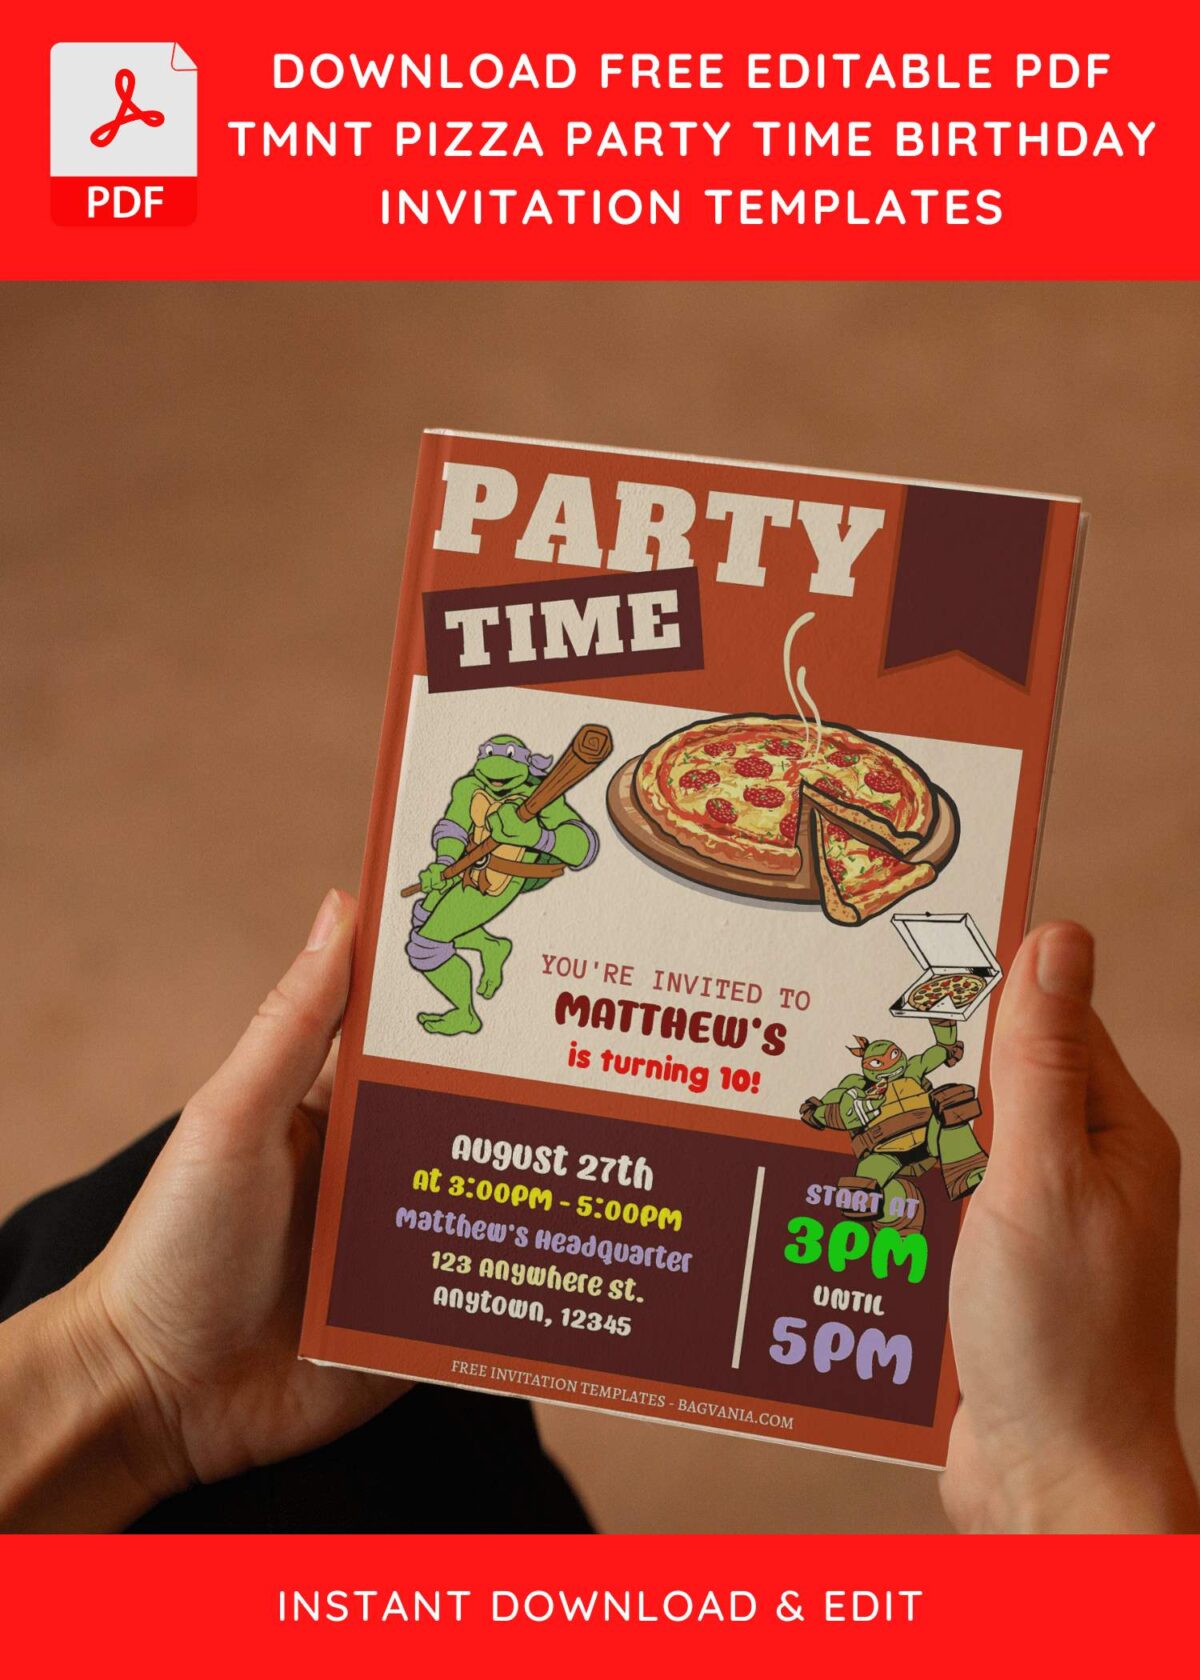 (Free Editable PDF) Fun TMNT Pizza Party Time Birthday Invitation Templates E